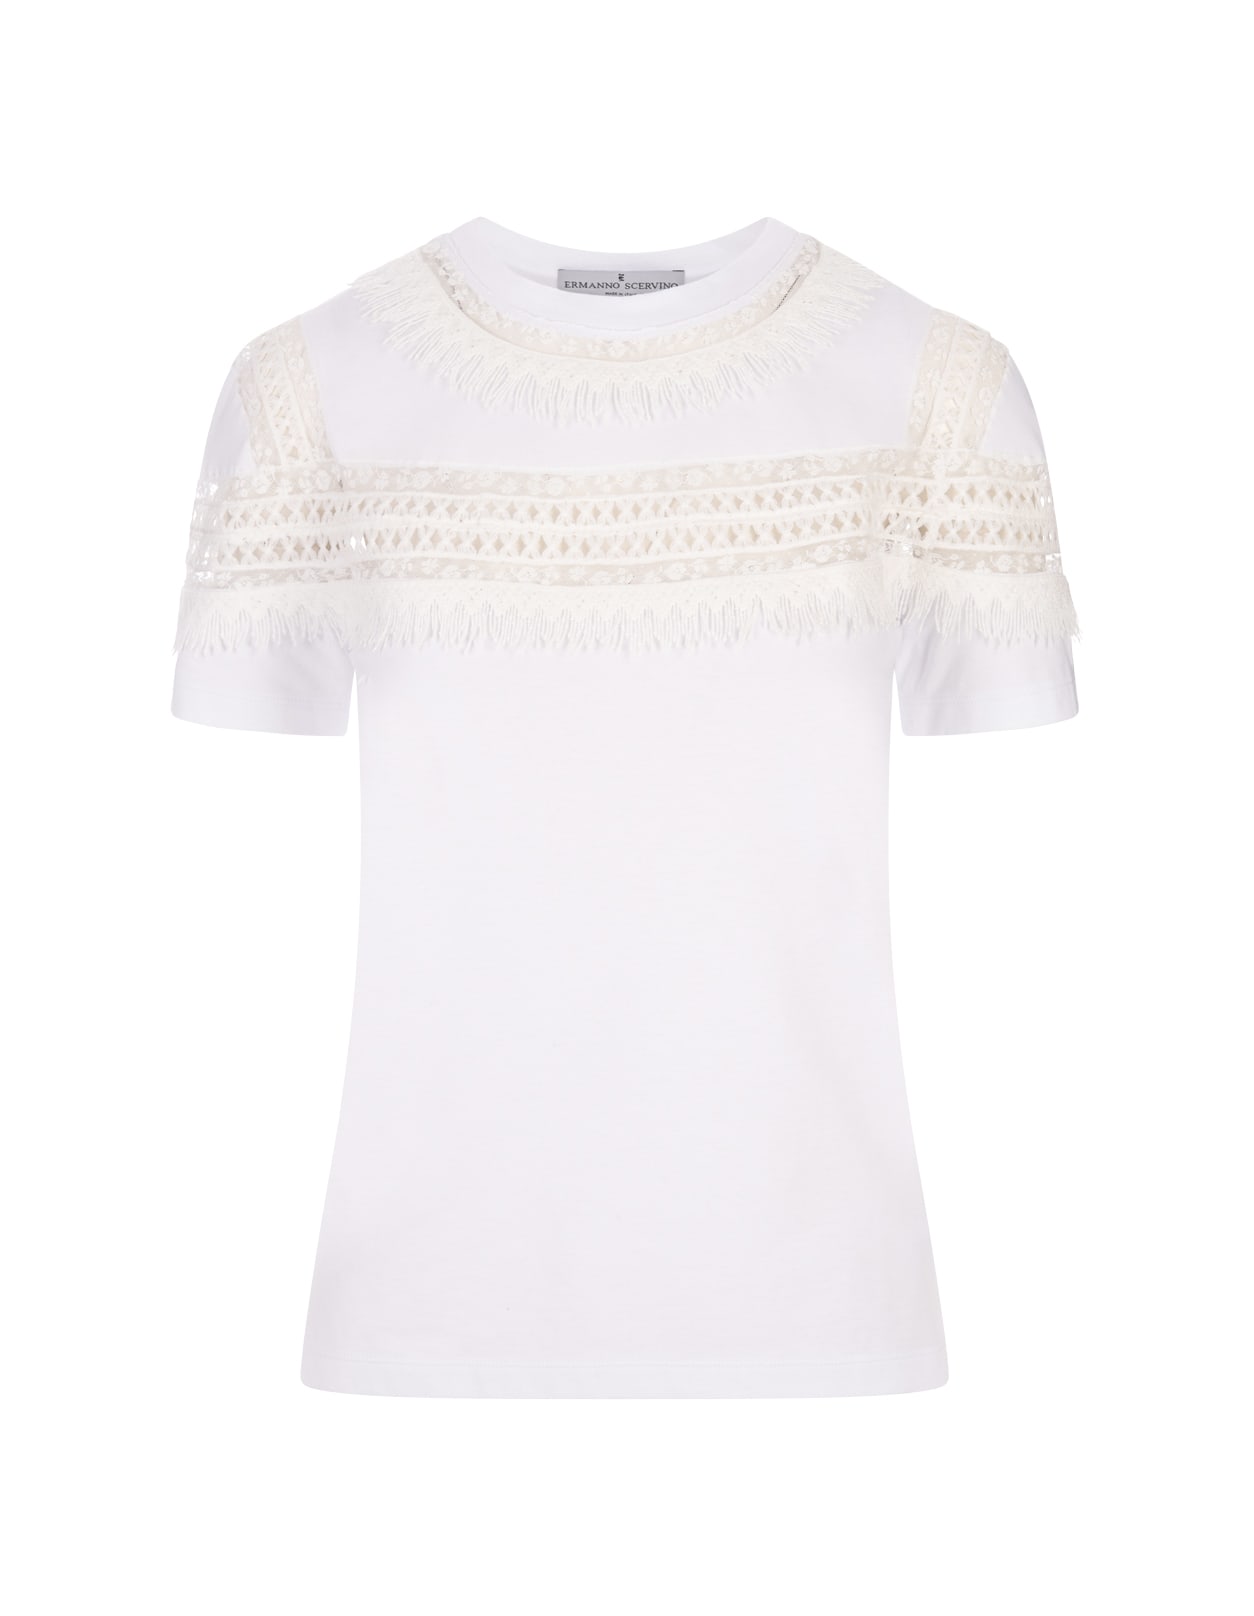 Ermanno Scervino White T-shirt With Macramé Lace